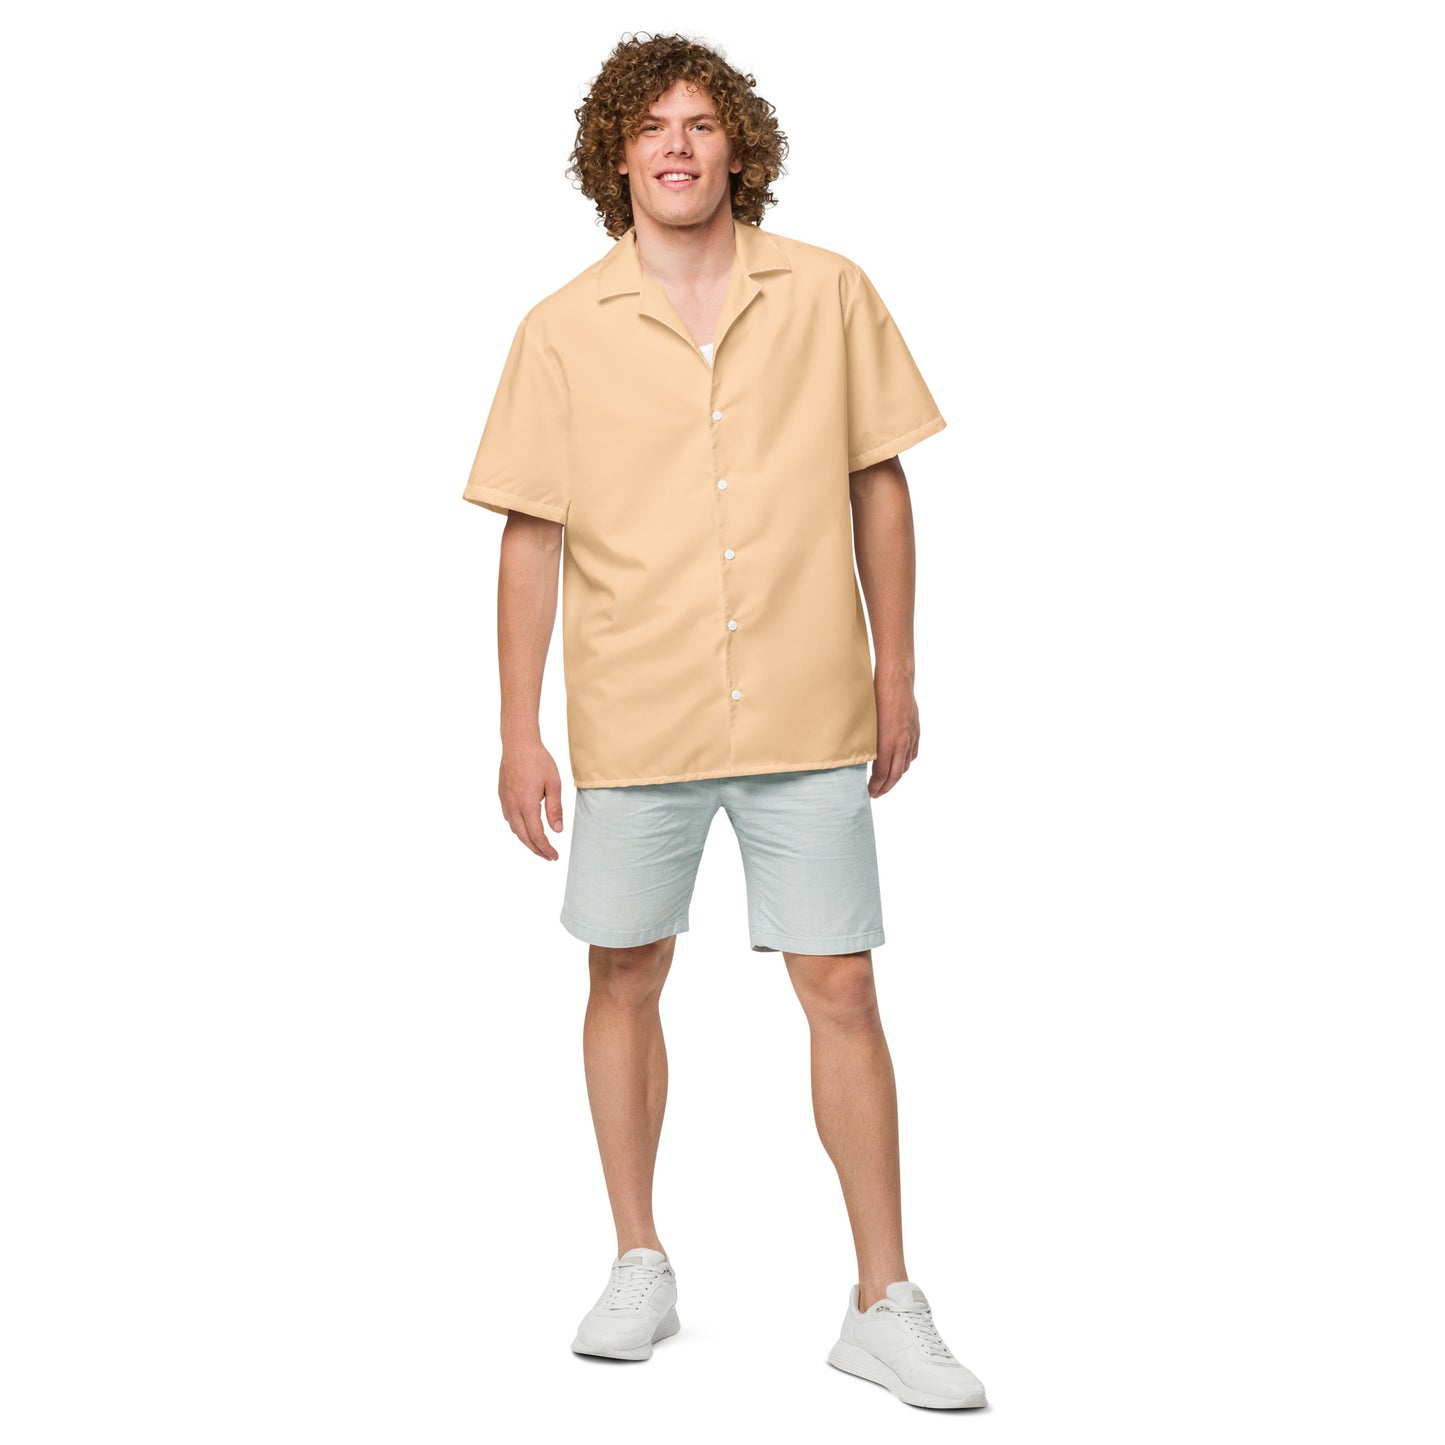 Clownfish Orange button shirt - Tropical Seas Clothing 